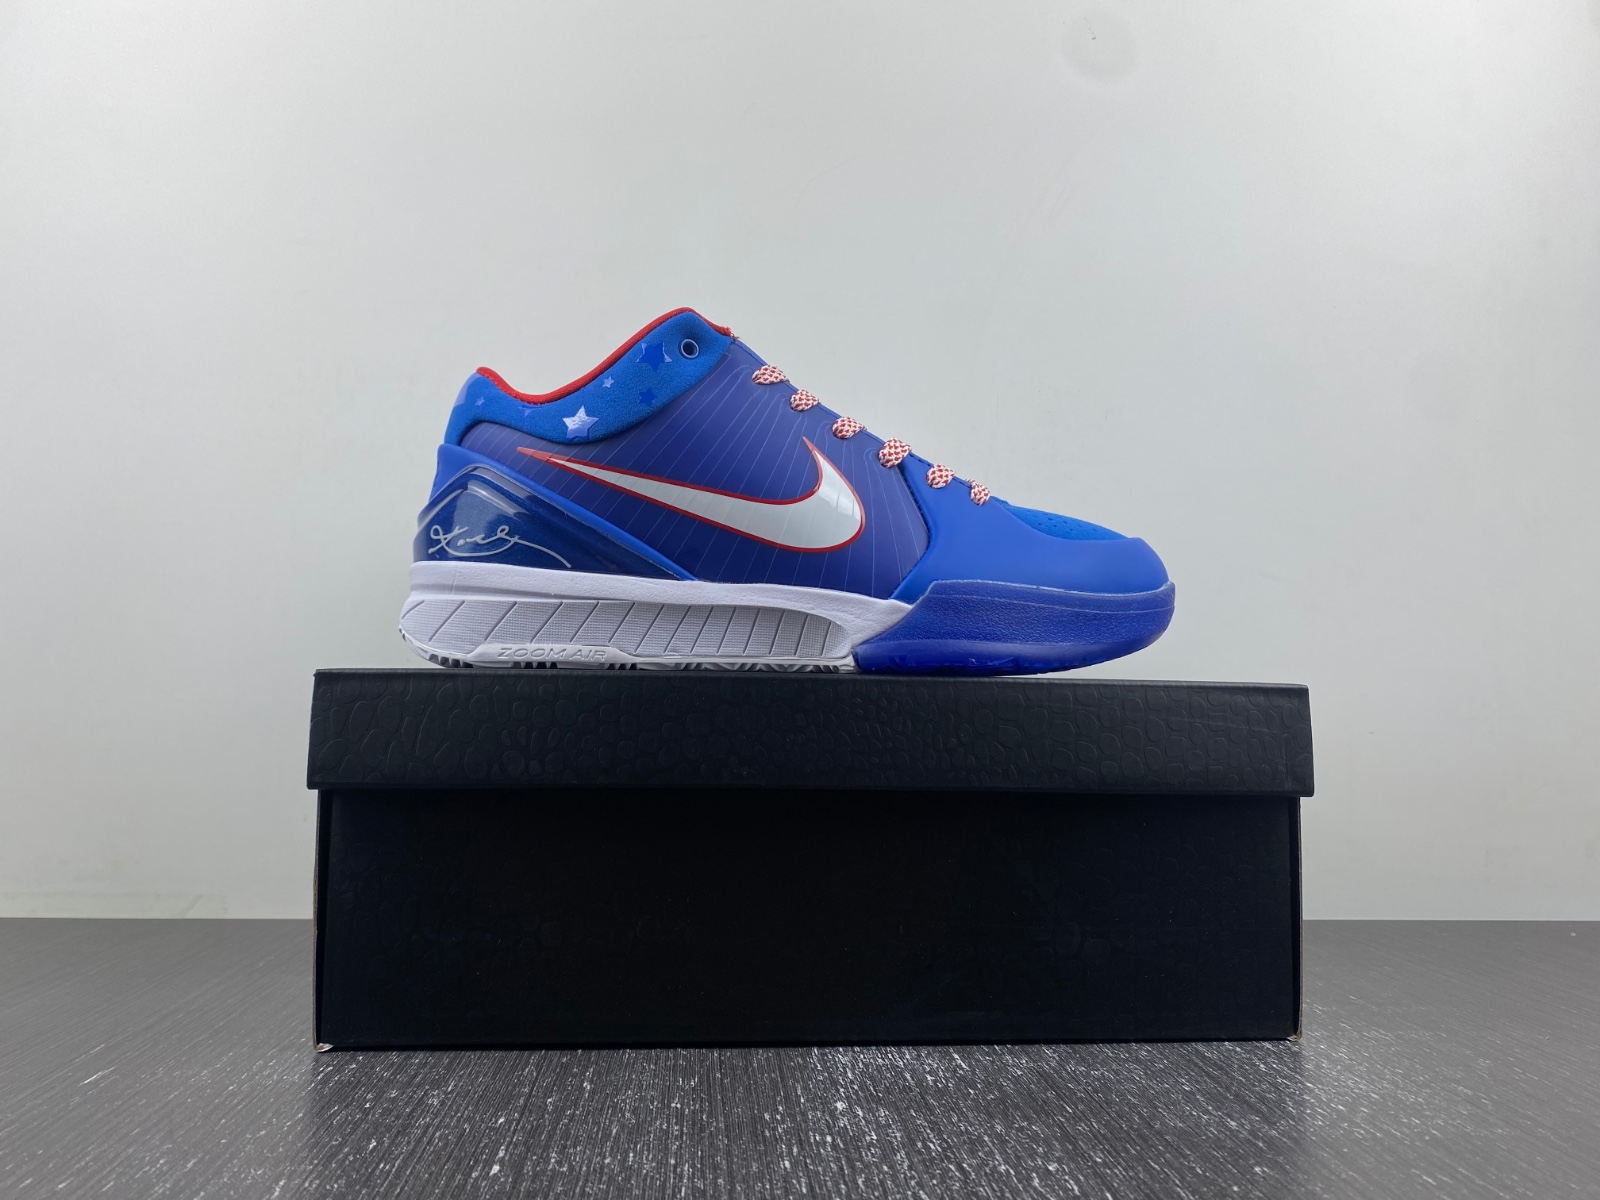 Nike Kobe 4 Protro “Philly”